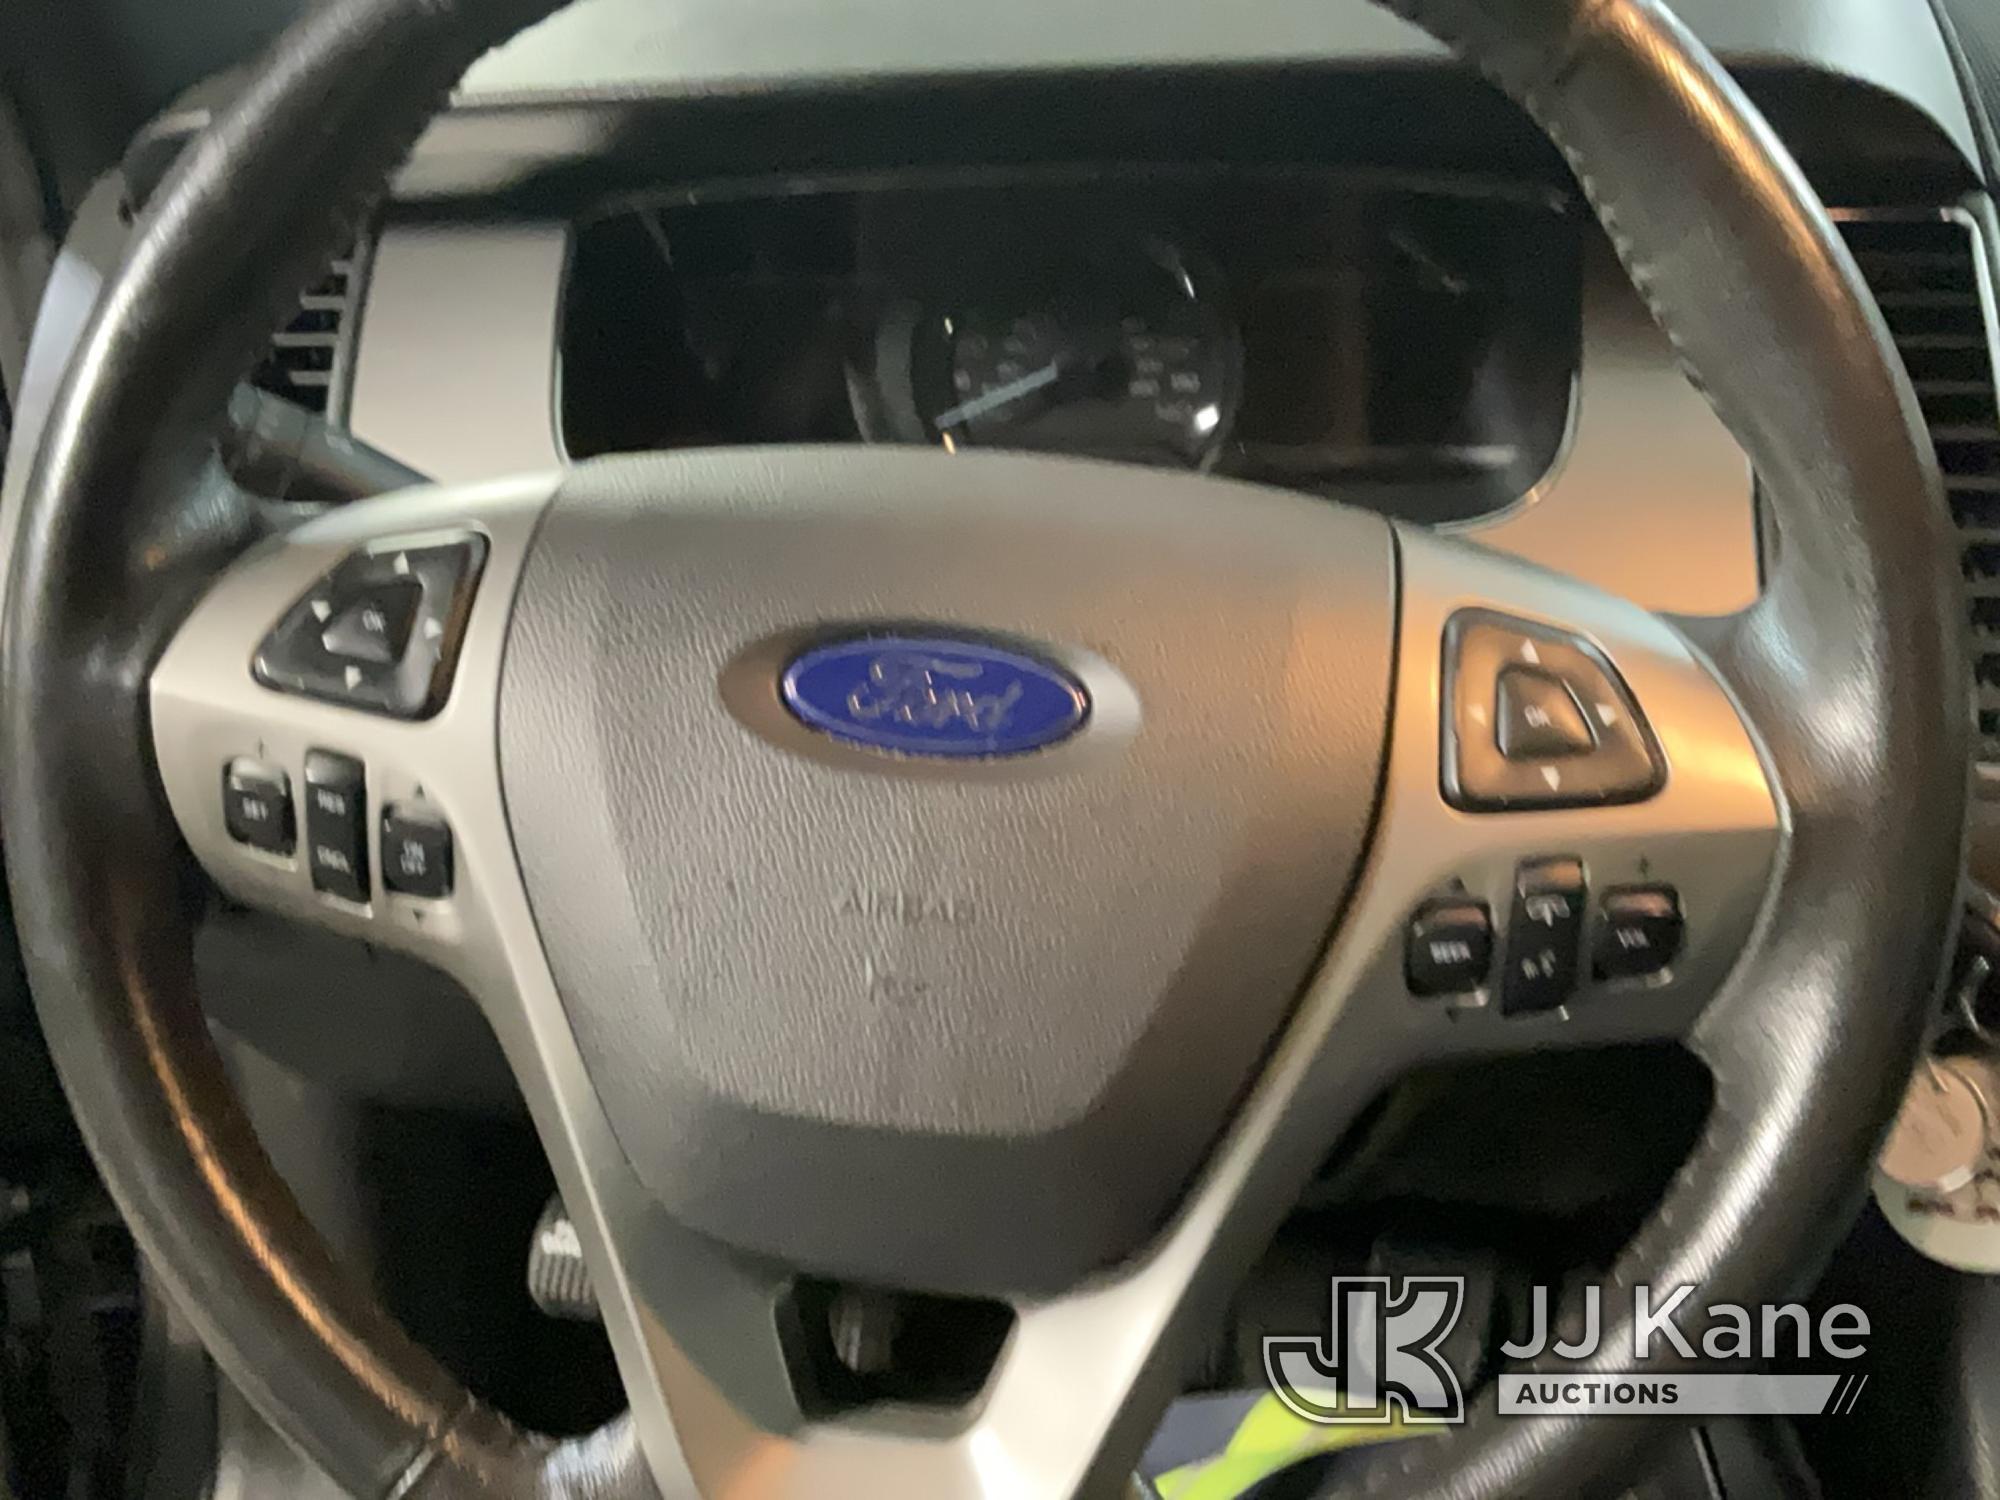 (Florence, SC) 2014 Ford Taurus 4-Door Sedan Runs & Moves, Minor Body Damage